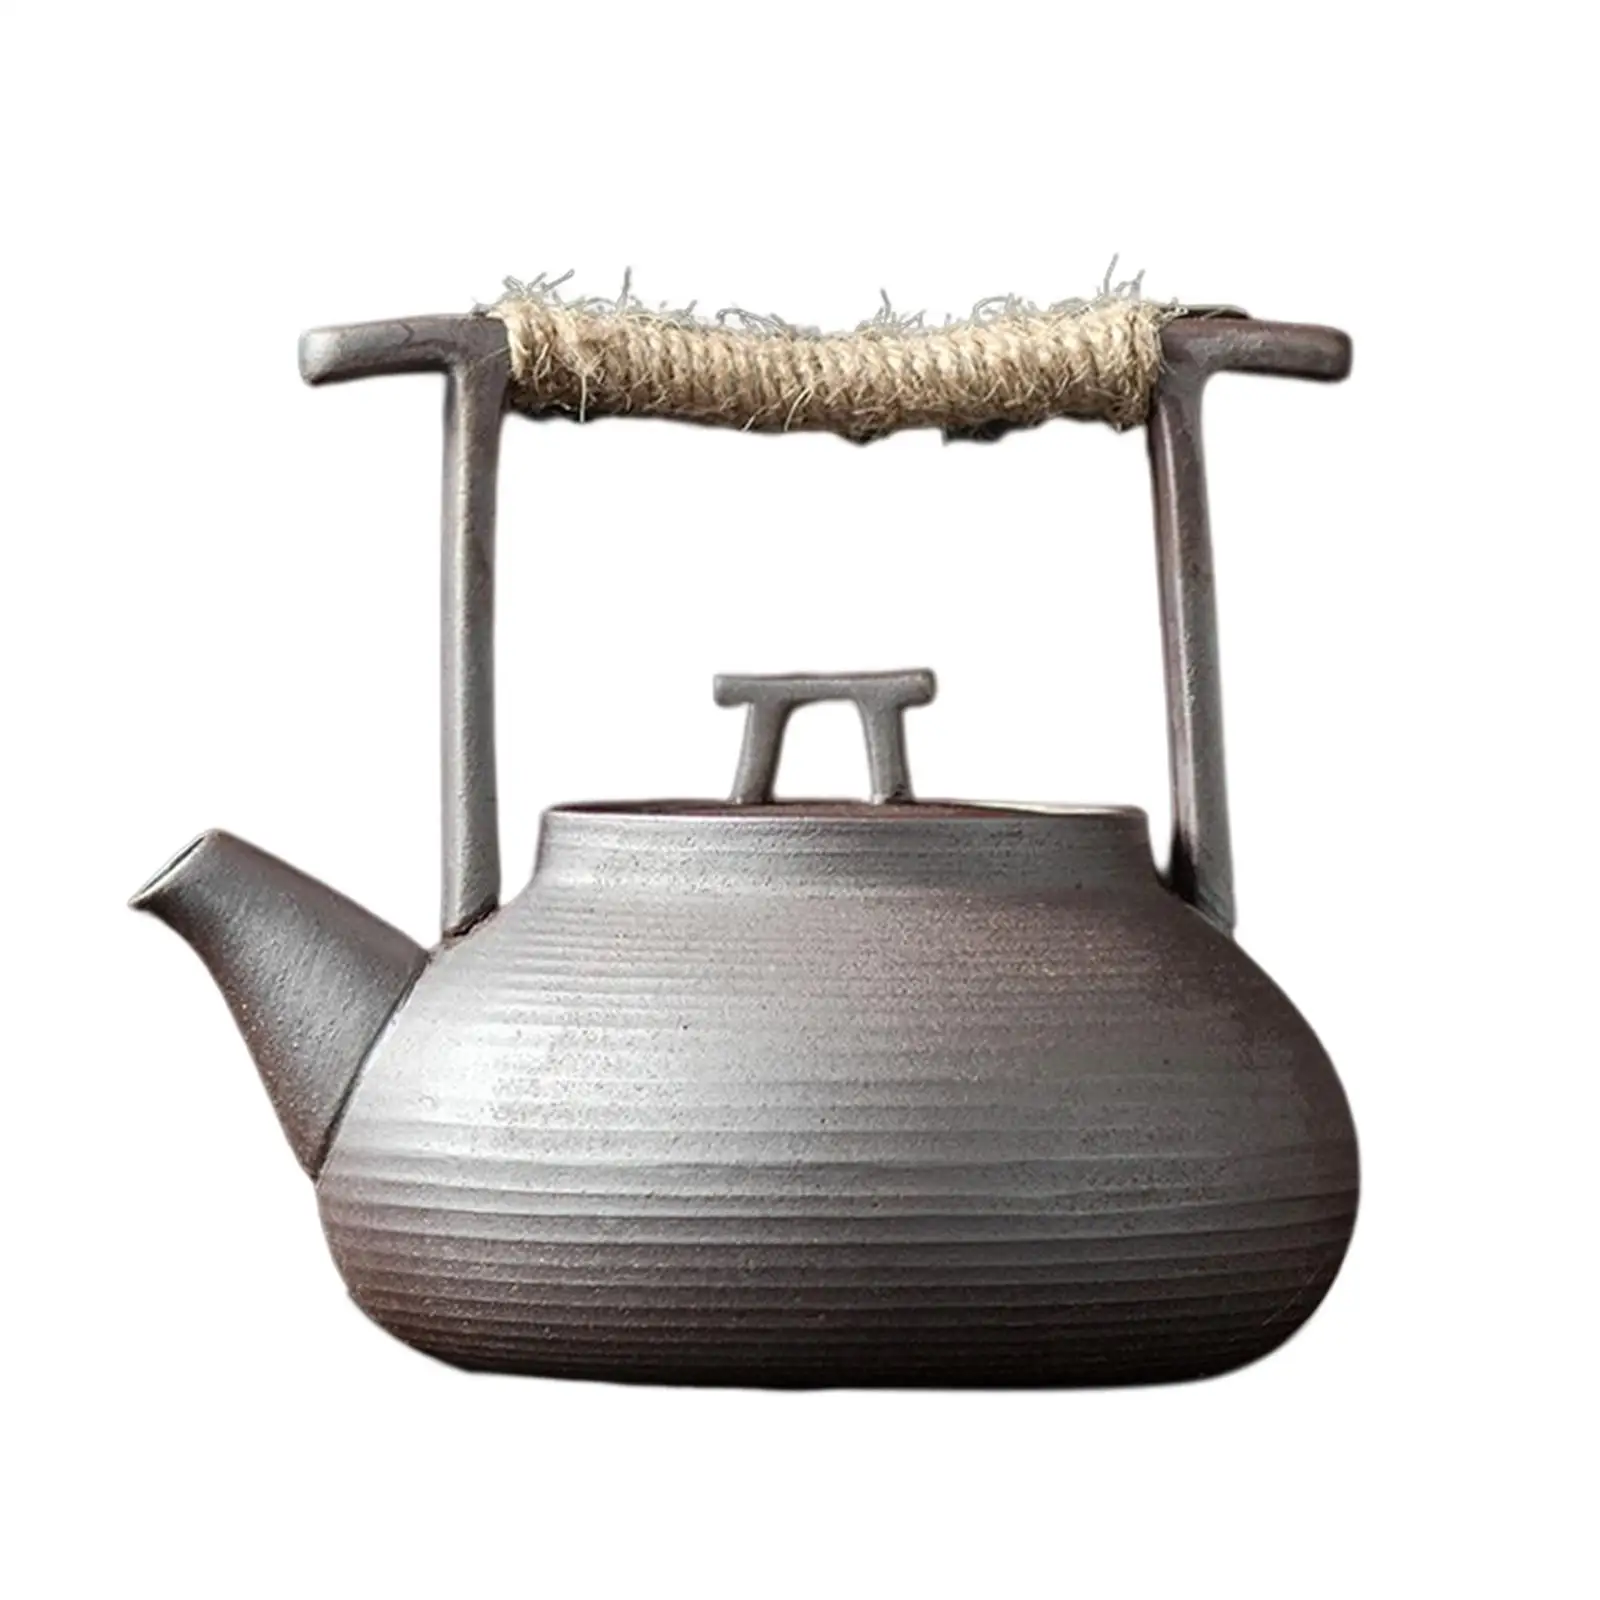 Ceramic Tea Kettle Teapot Handmade Teapot Warmer Water Pot Portable Pot Kung Fu Teapot for Home Teahouse Camping